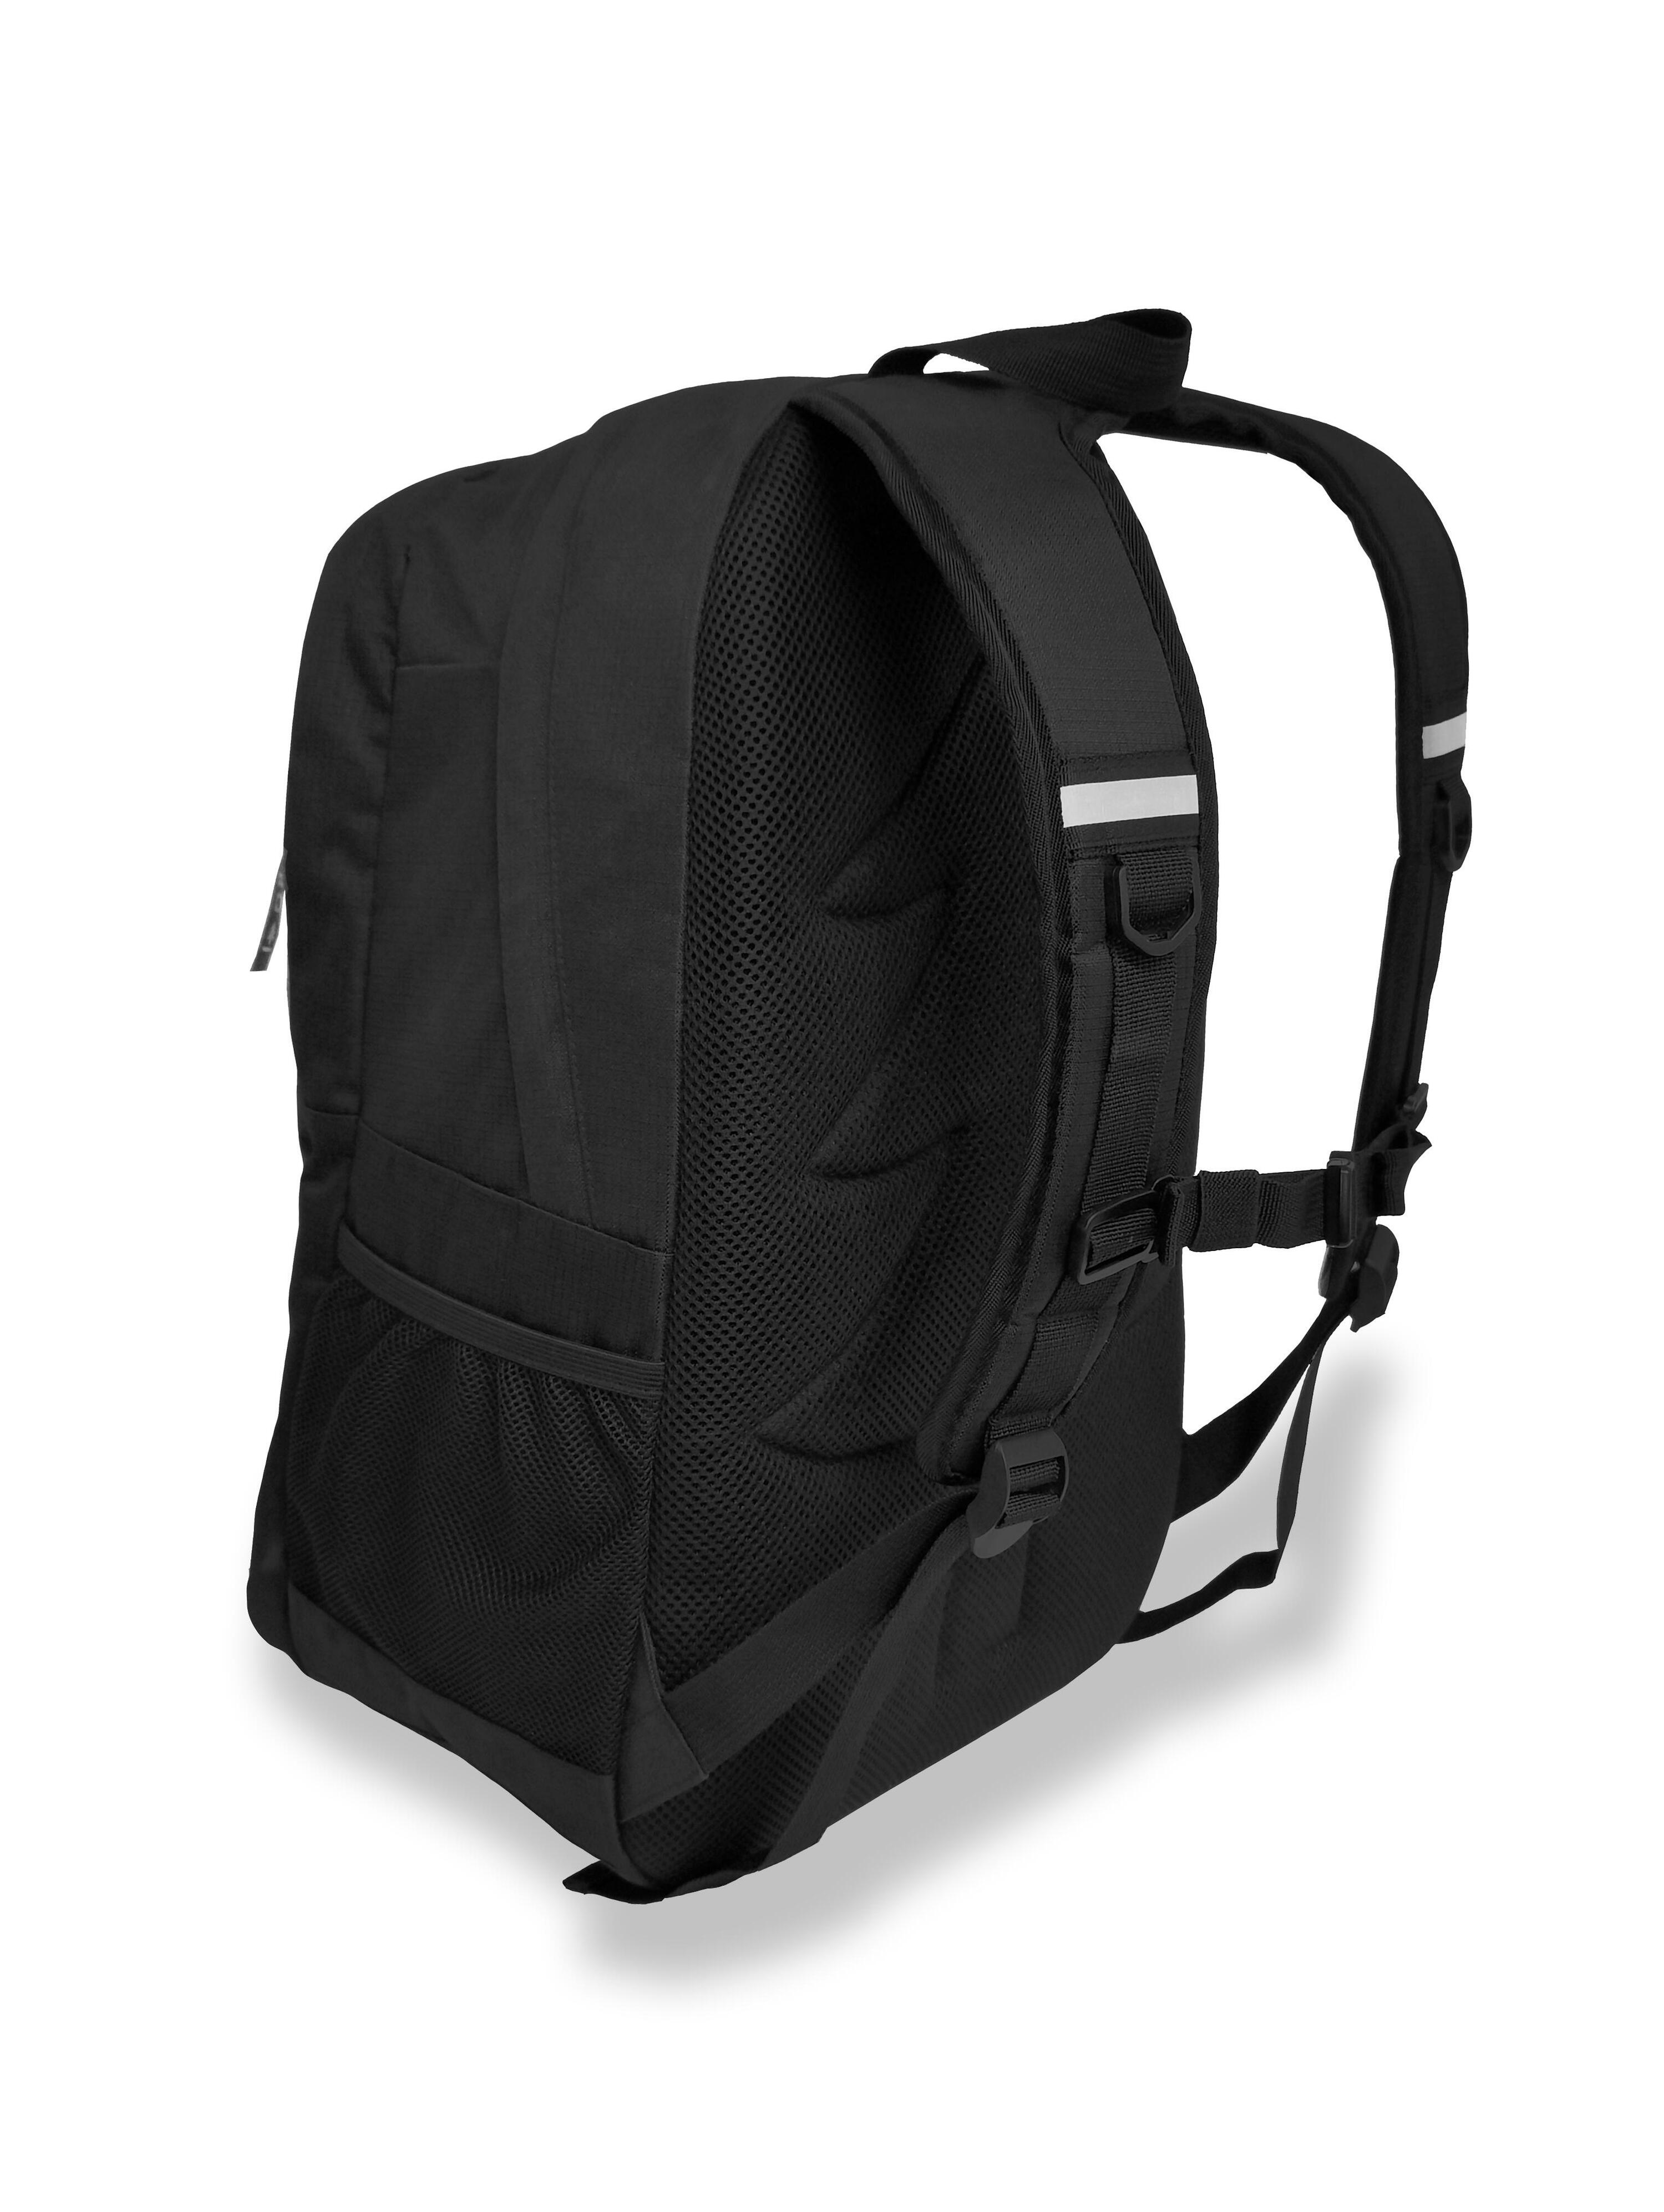 OLPRO 28L Daysac Backpack 4/6